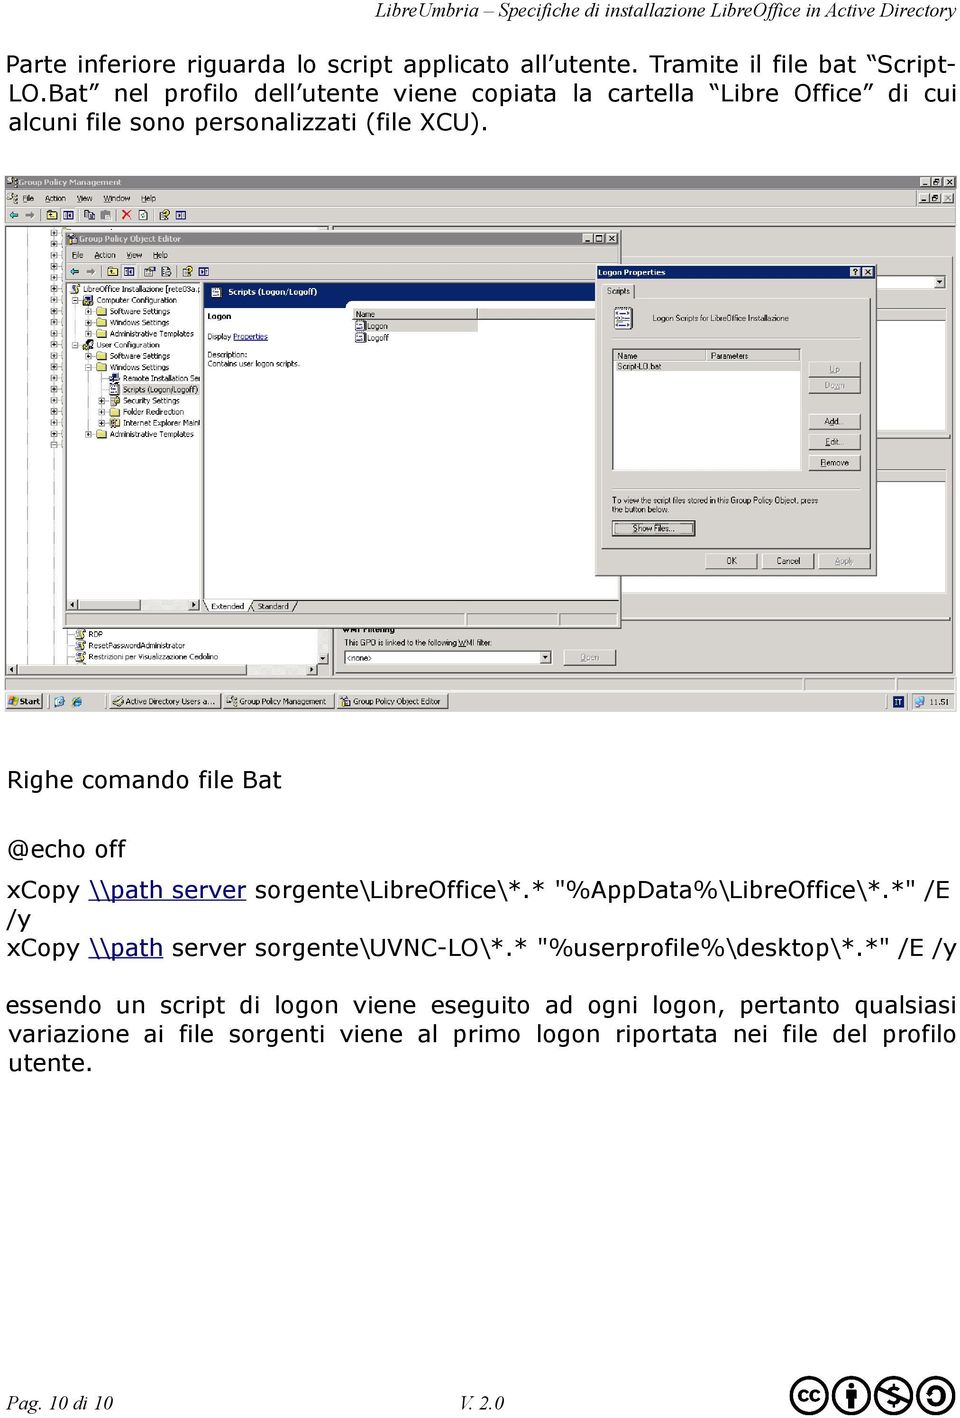 Righe comando file Bat @echo off xcopy \\path server sorgente\libreoffice\*.* "%AppData%\LibreOffice\*.